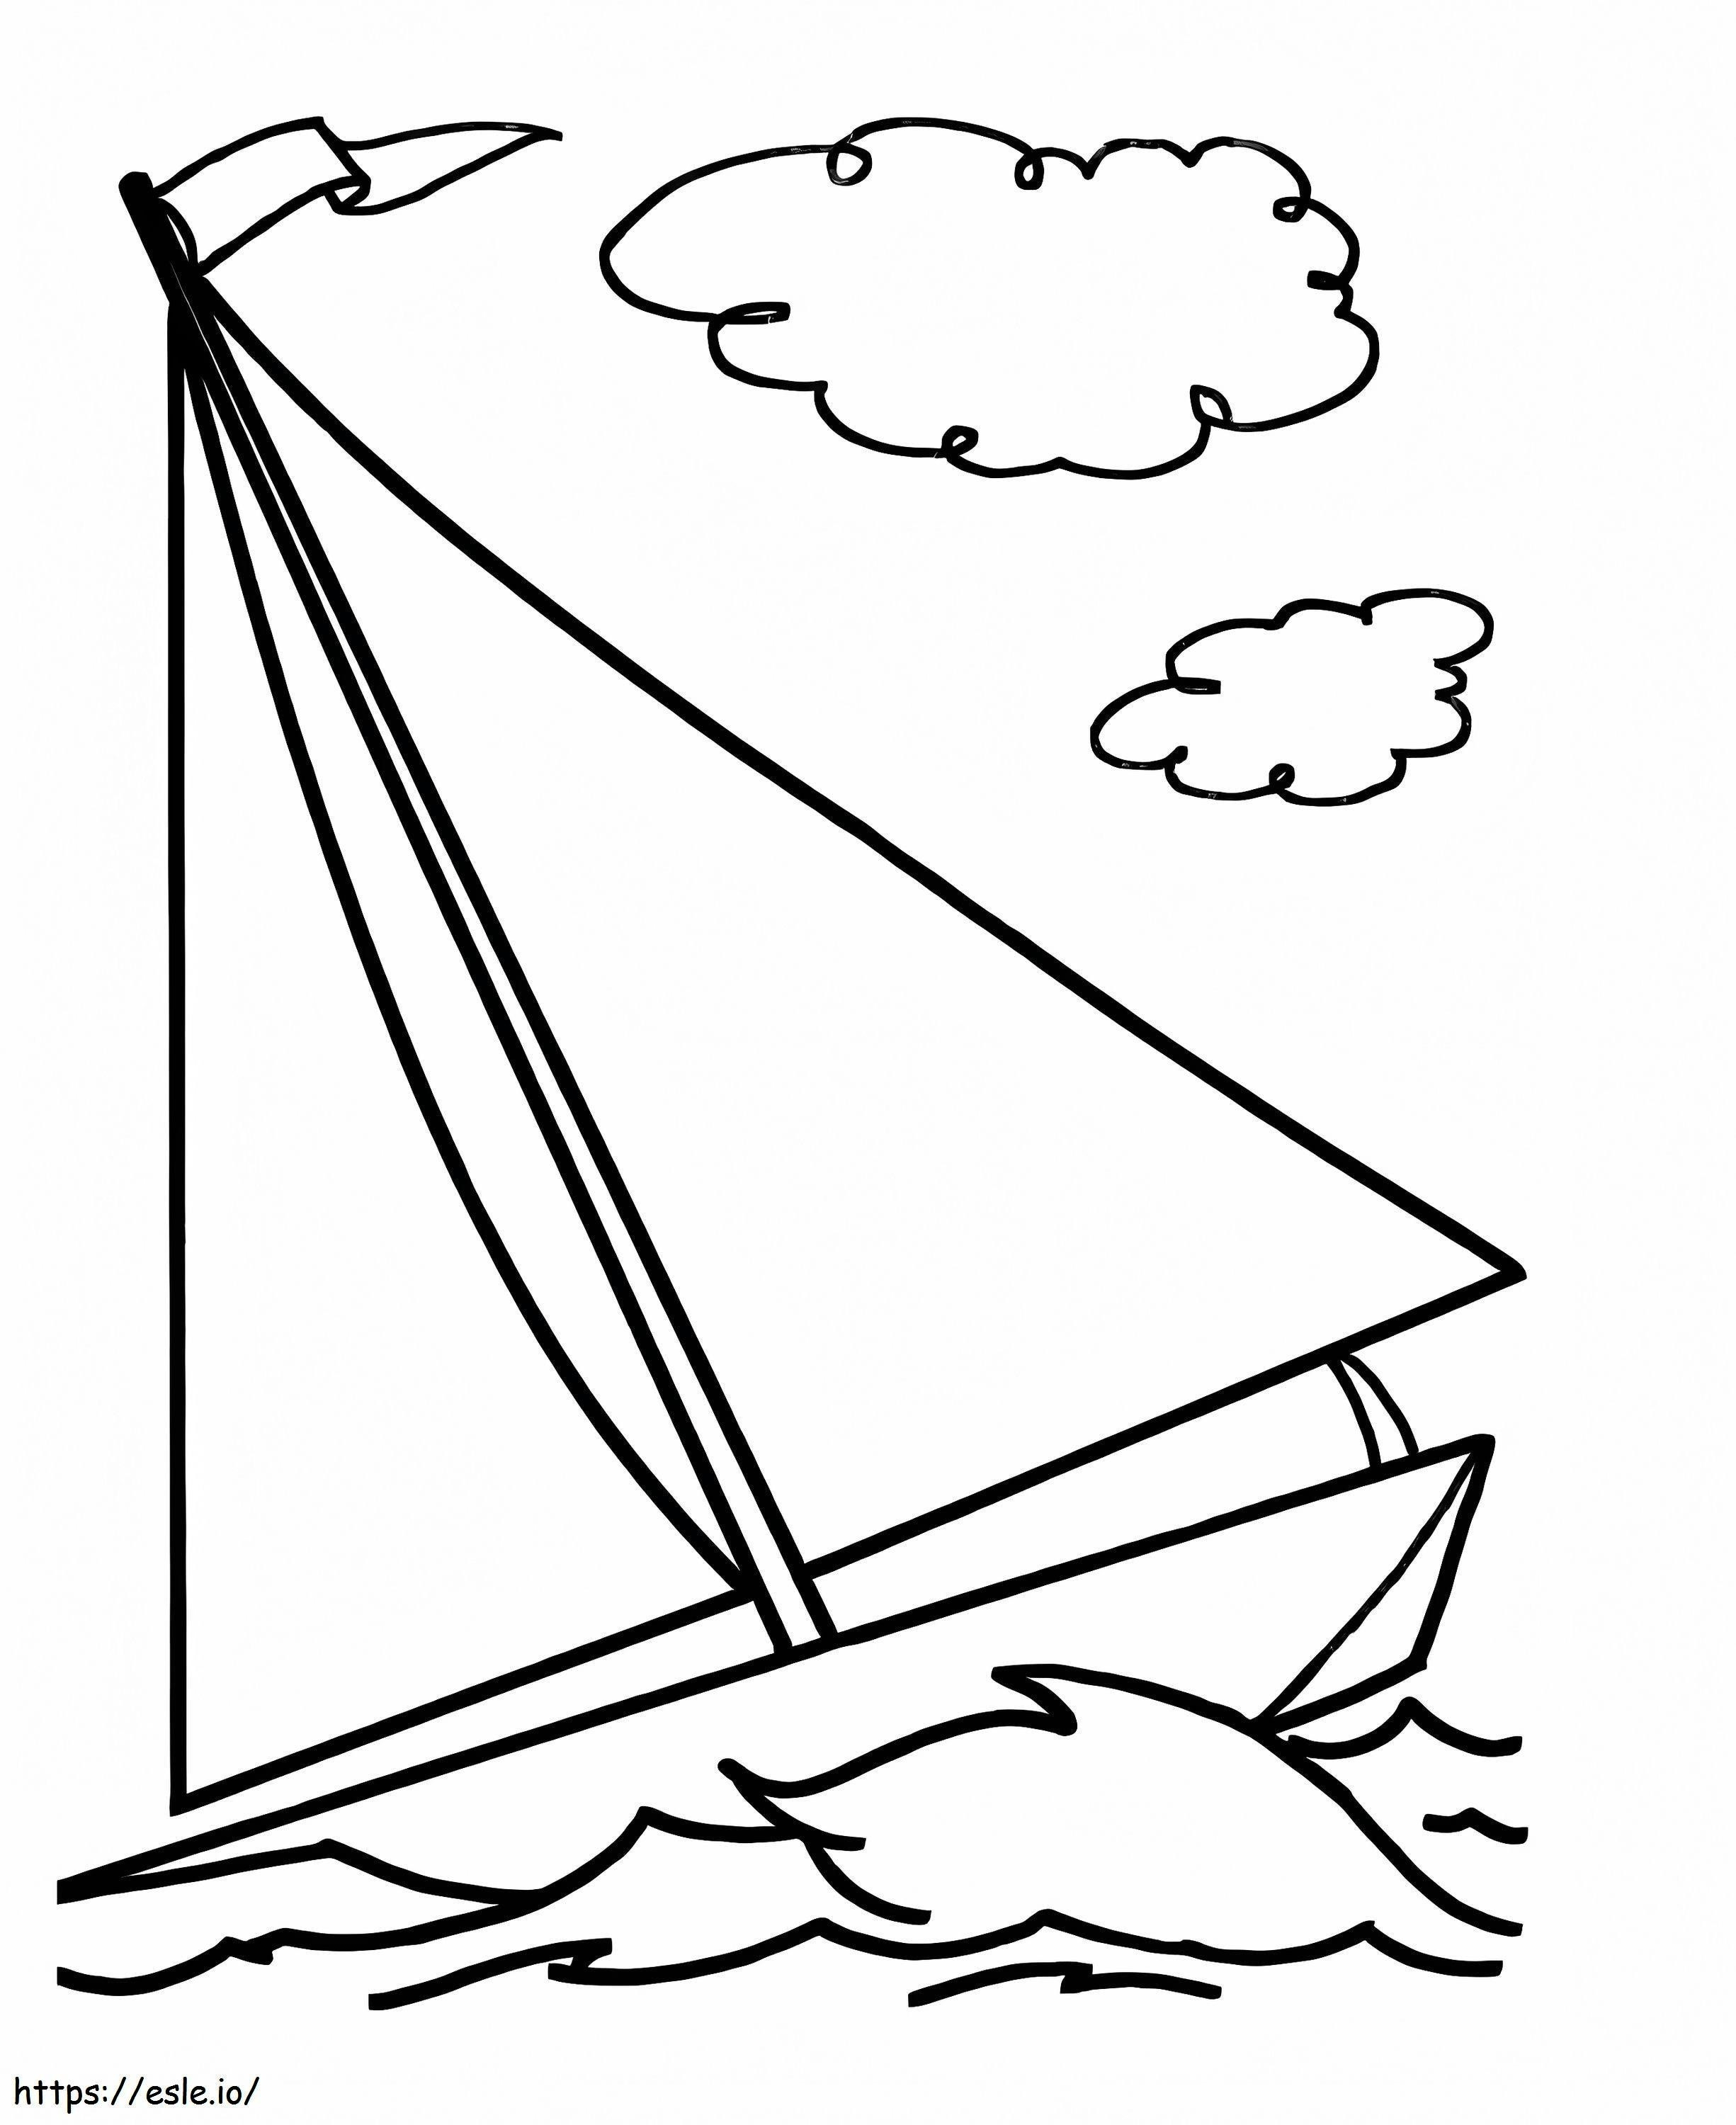 A Sailboat coloring page